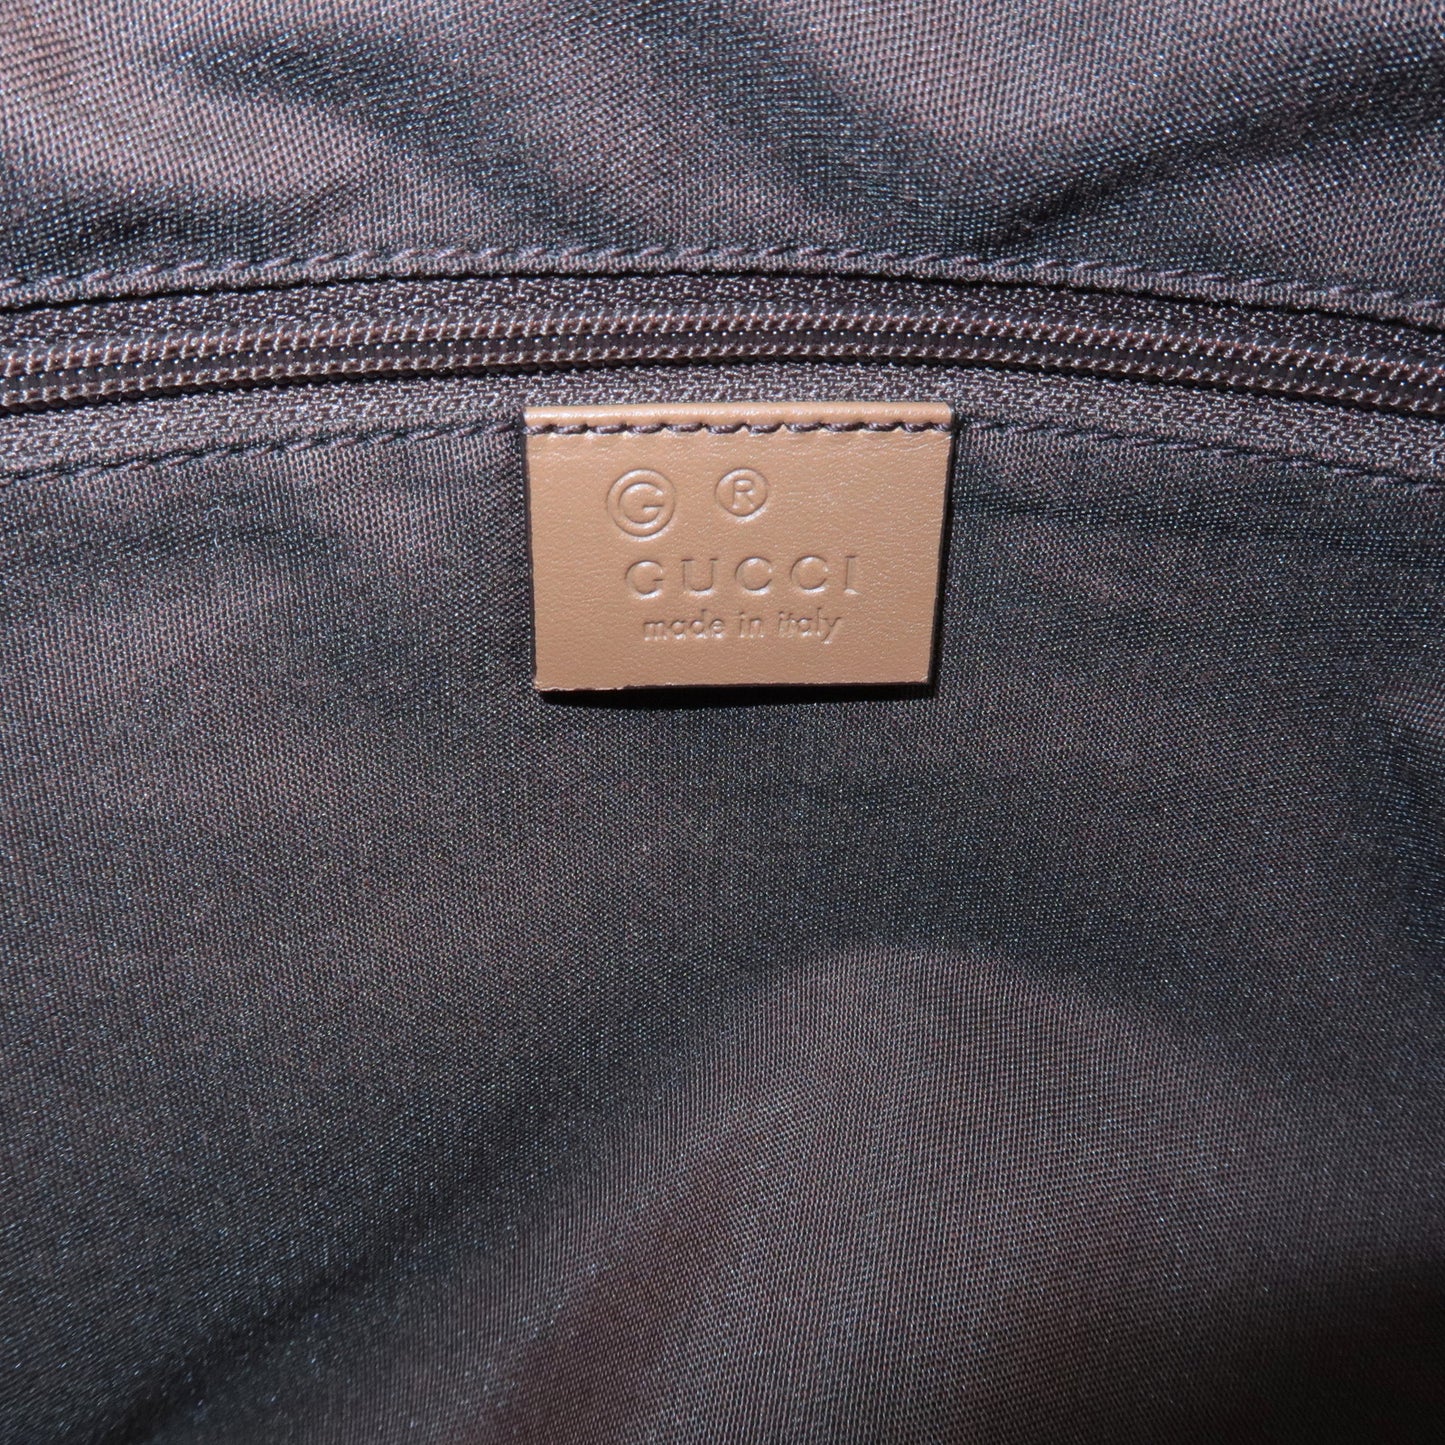 GUCCI GG Canvas Leather Shoulder Bag Beige Brown 388930